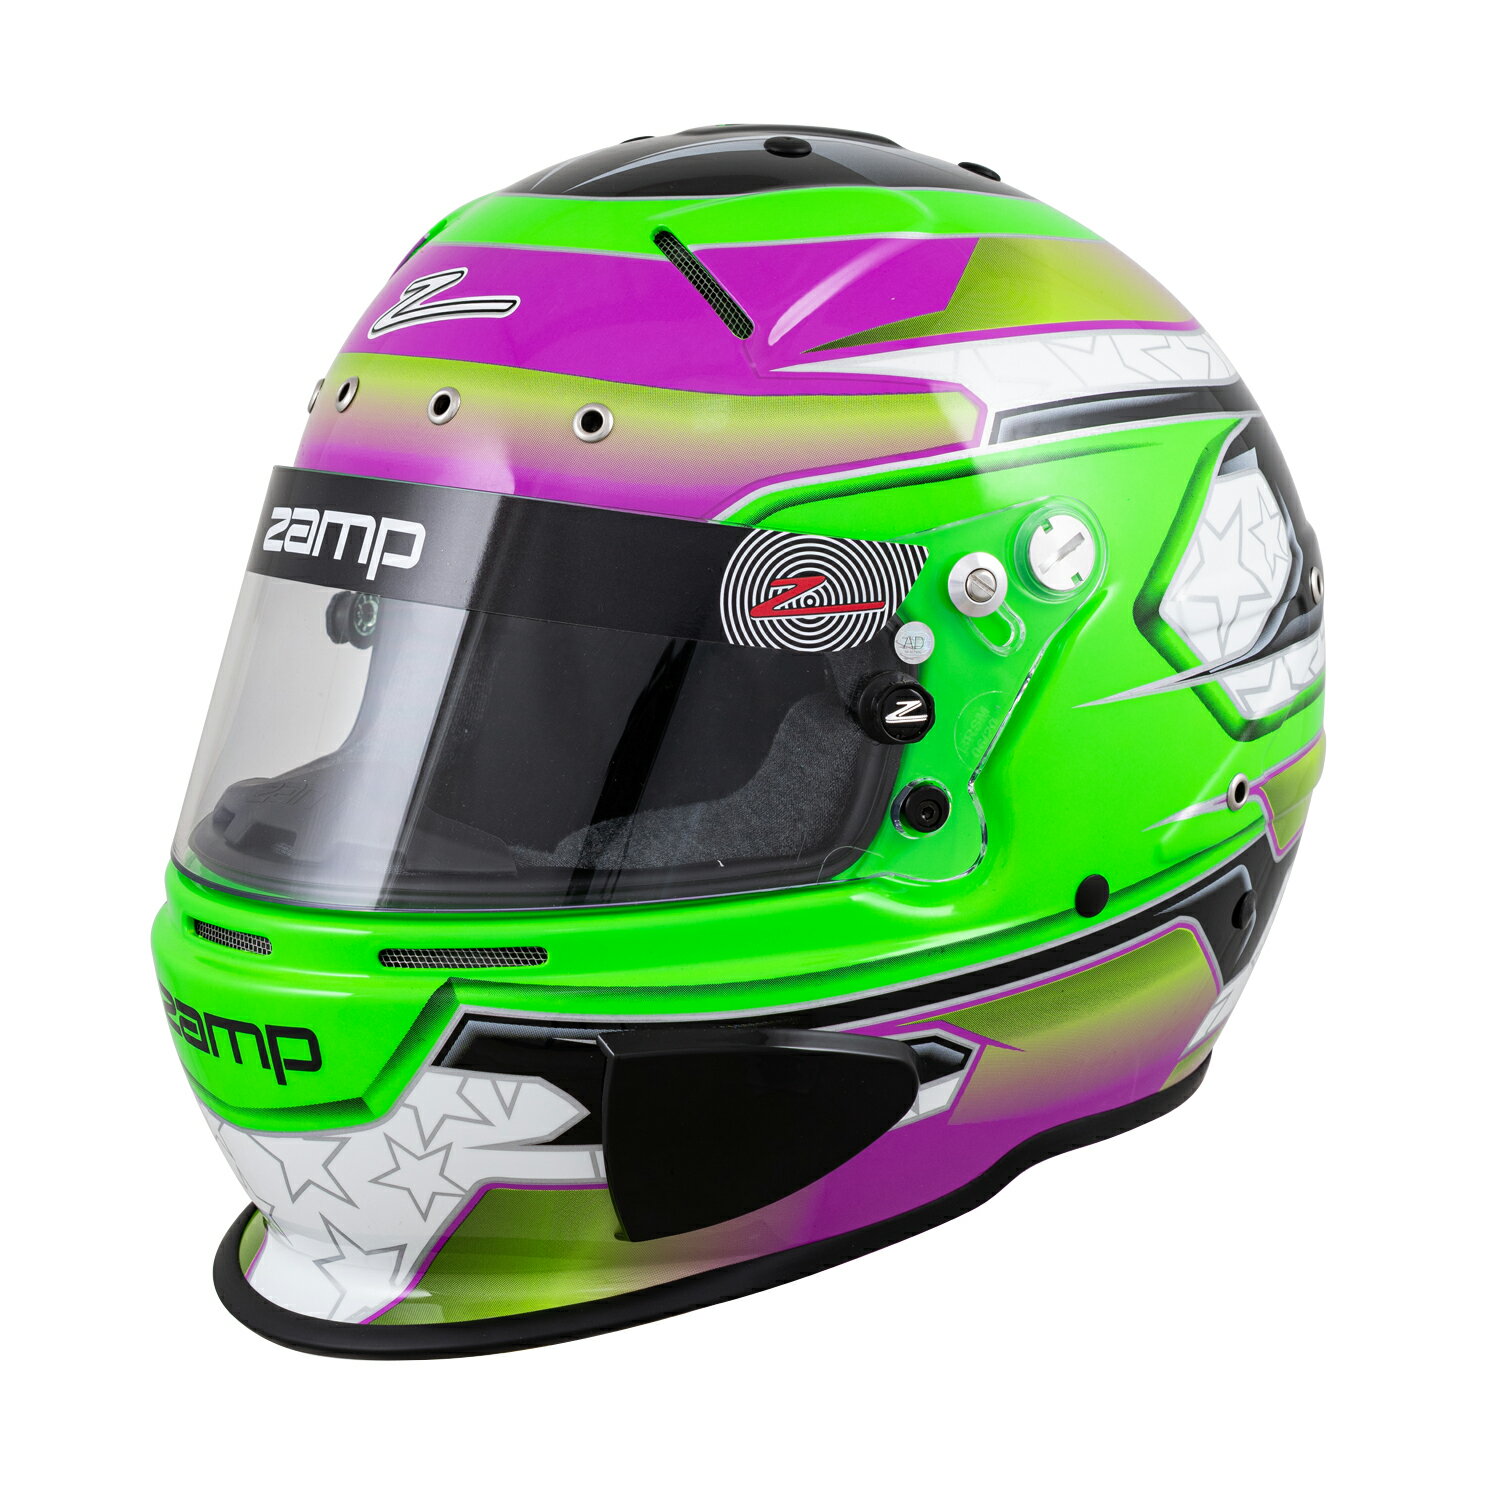 Zamp Helmet RZ-70E Switch Graphic Green/Purple グリーン/パープル グラフィック Graphic Snell SA2020 / FIA 8859-2015 ザンプヘル..